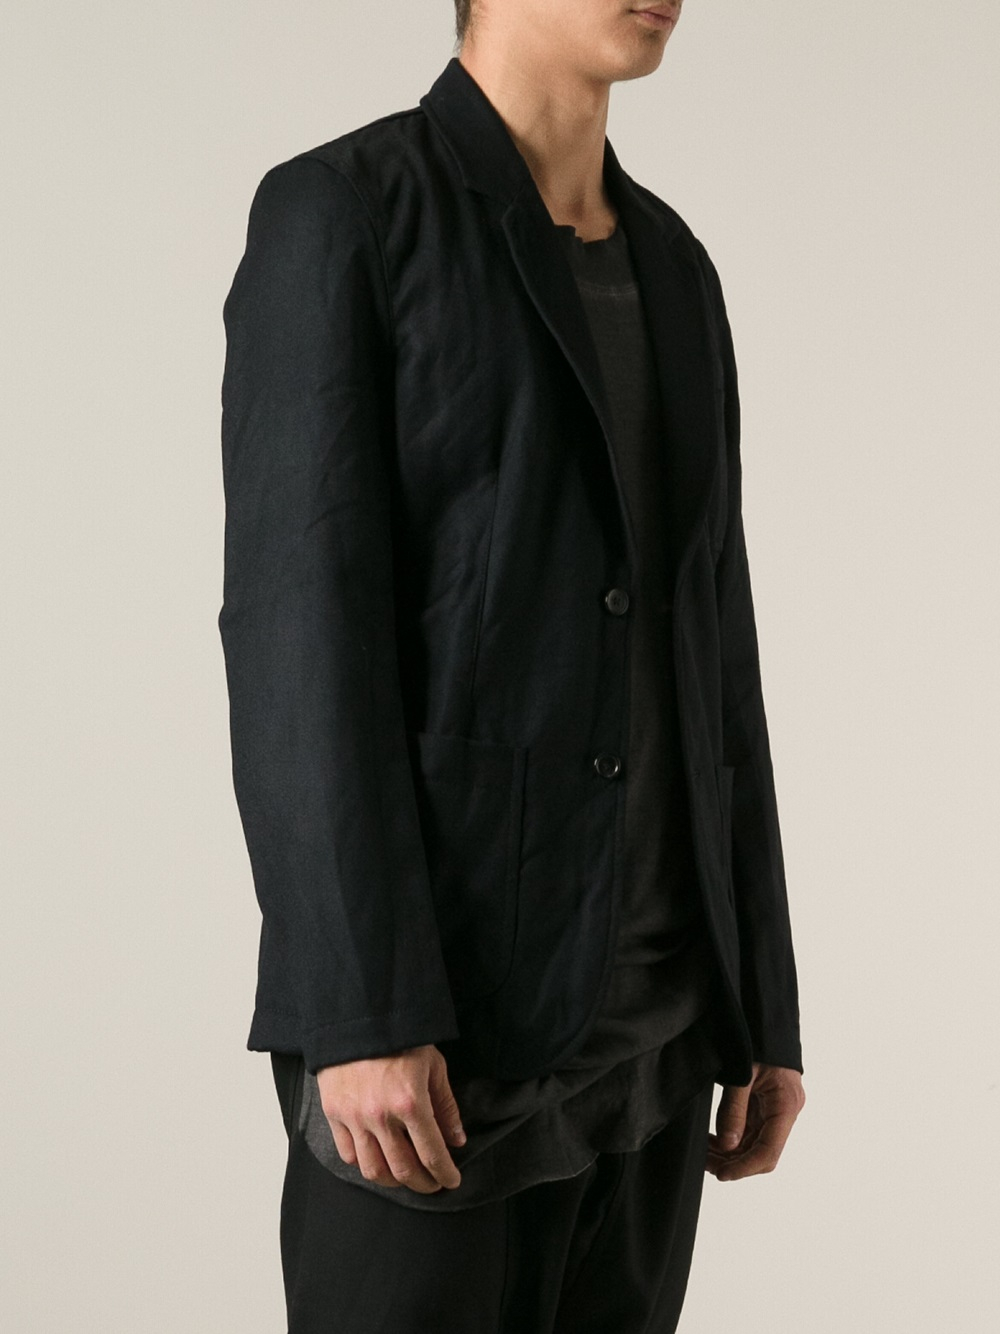 Lyst - Comme Des Garçons Deconstructed Blazer in Black for Men